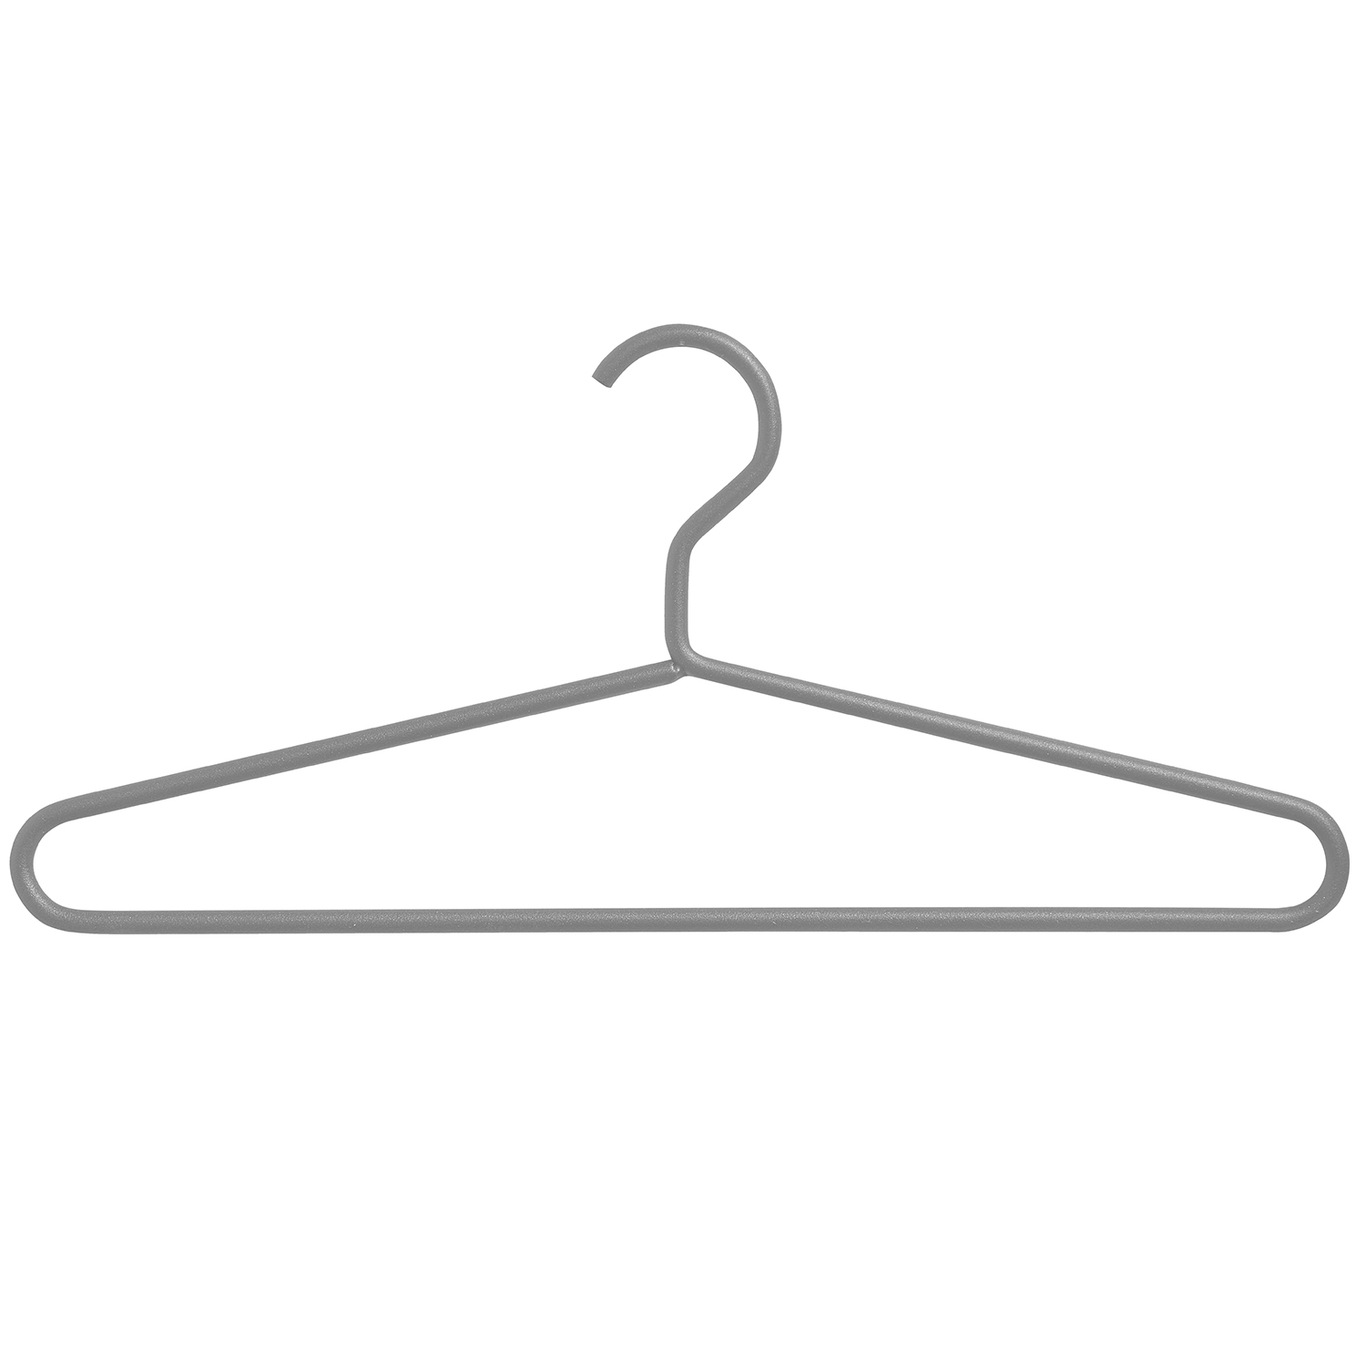 Alfred hanger 4 pack, Light gray - SMD Design @ RoyalDesign